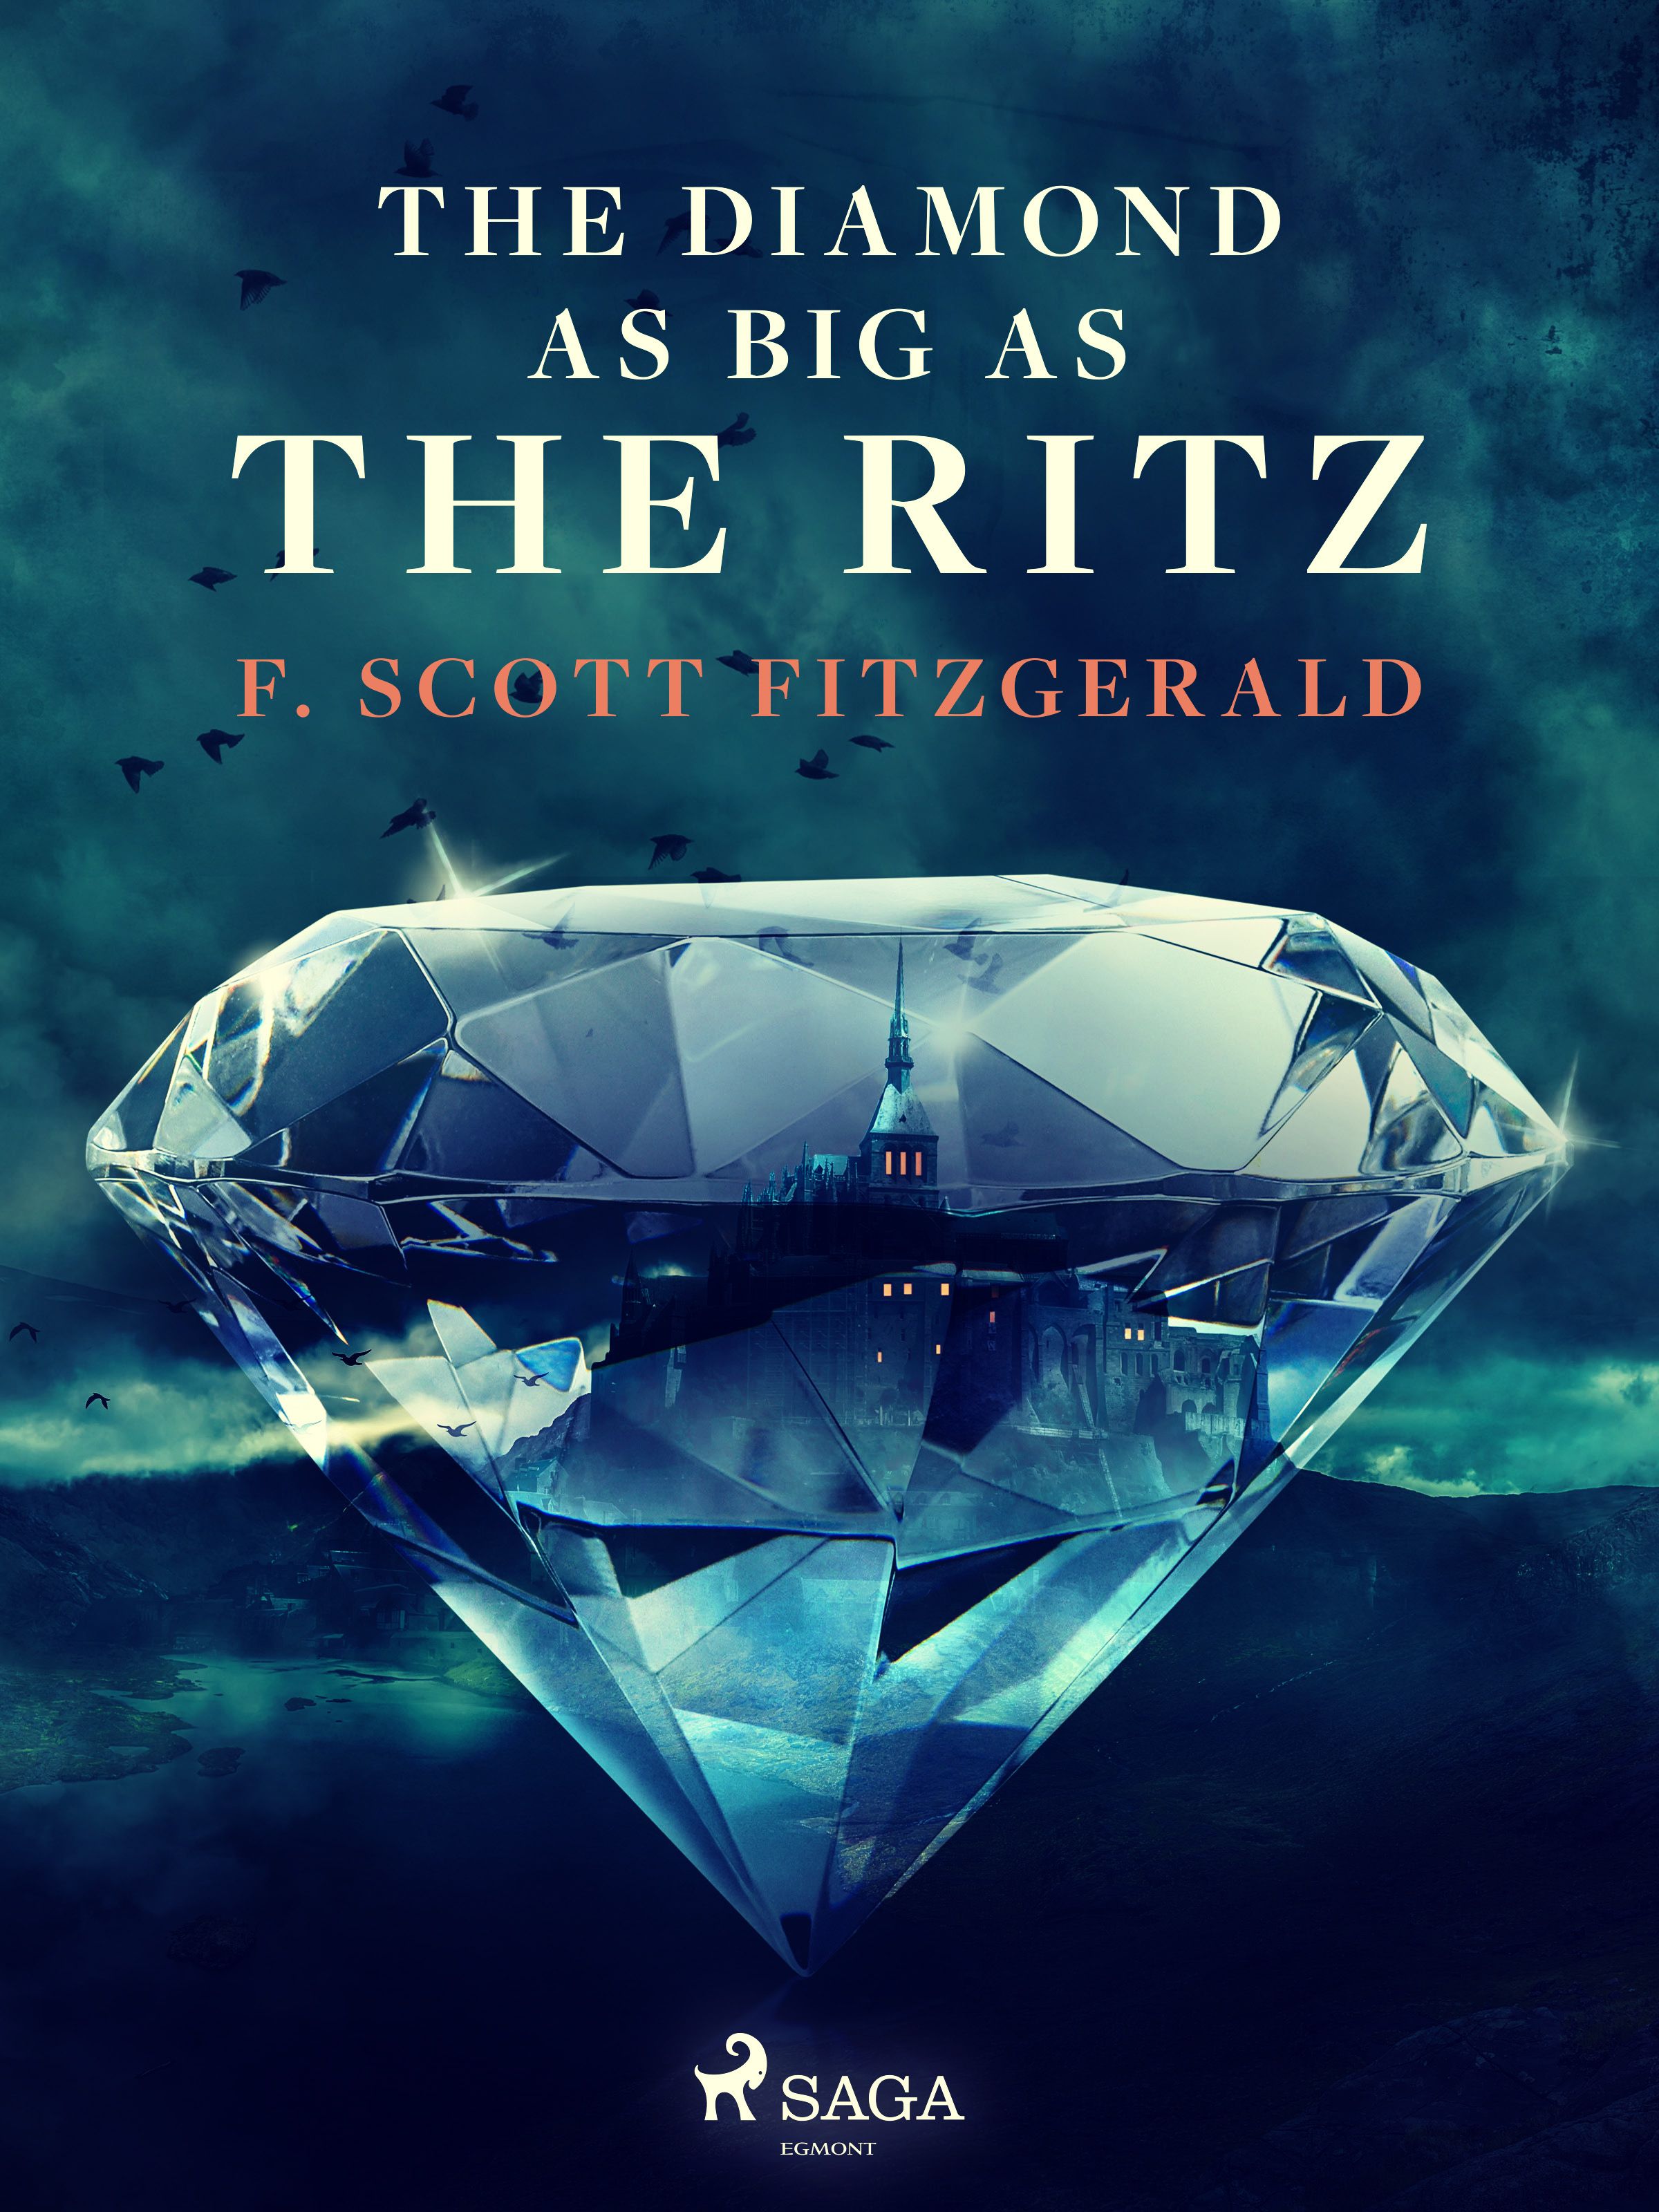 The Diamond as Big as the Ritz, e-bog af F. Scott. Fitzgerald